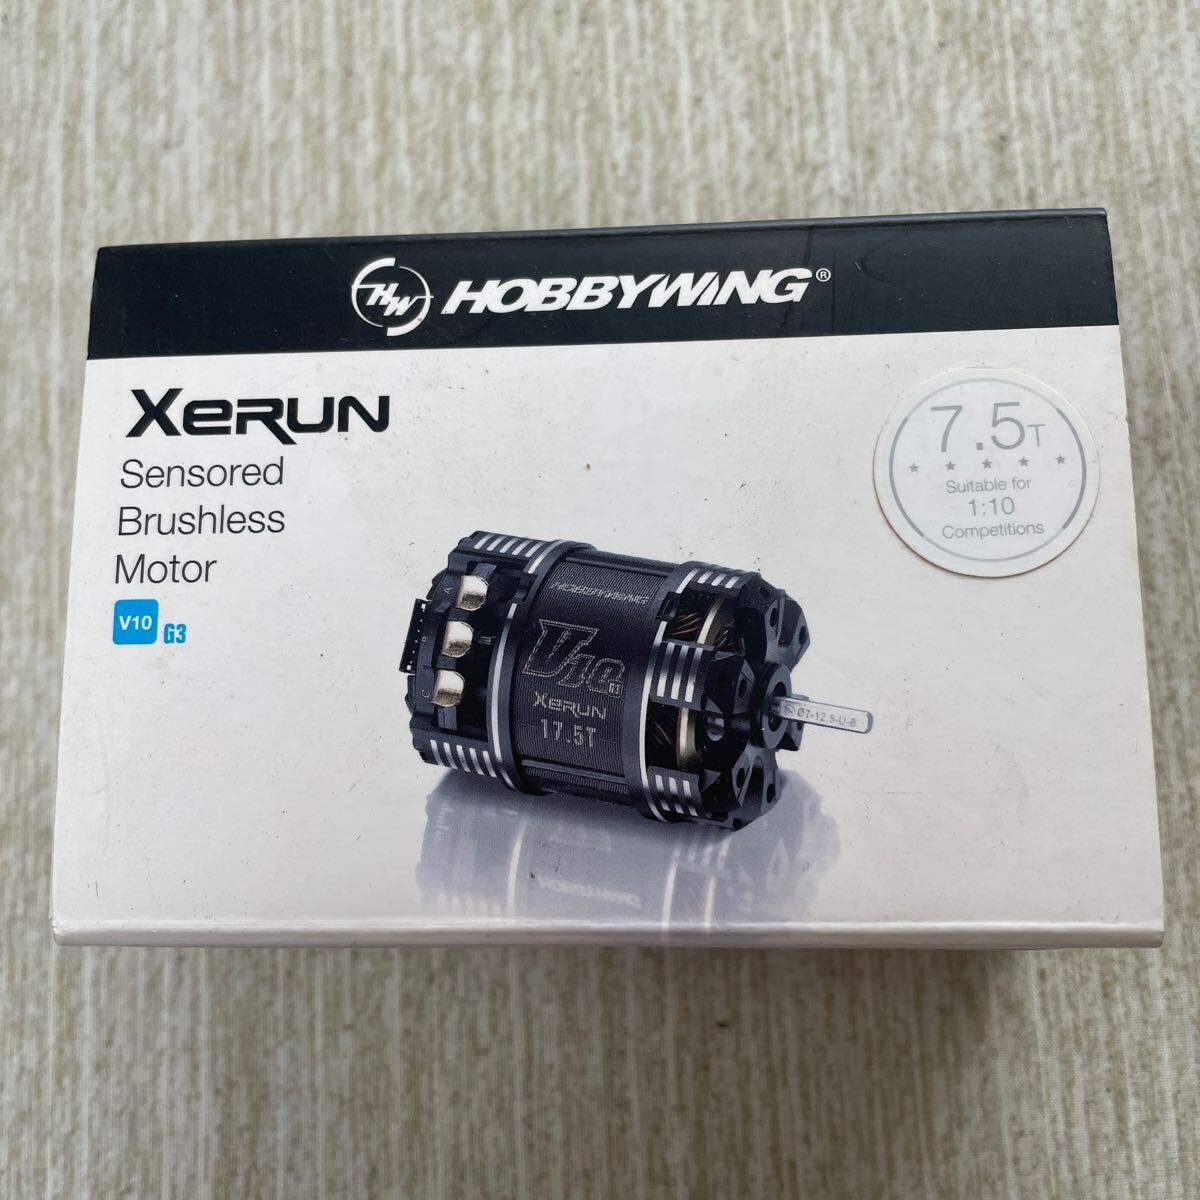 HOBBYWING бесщеточный motor XeRUN V10 G3 7.5T б/у товар 